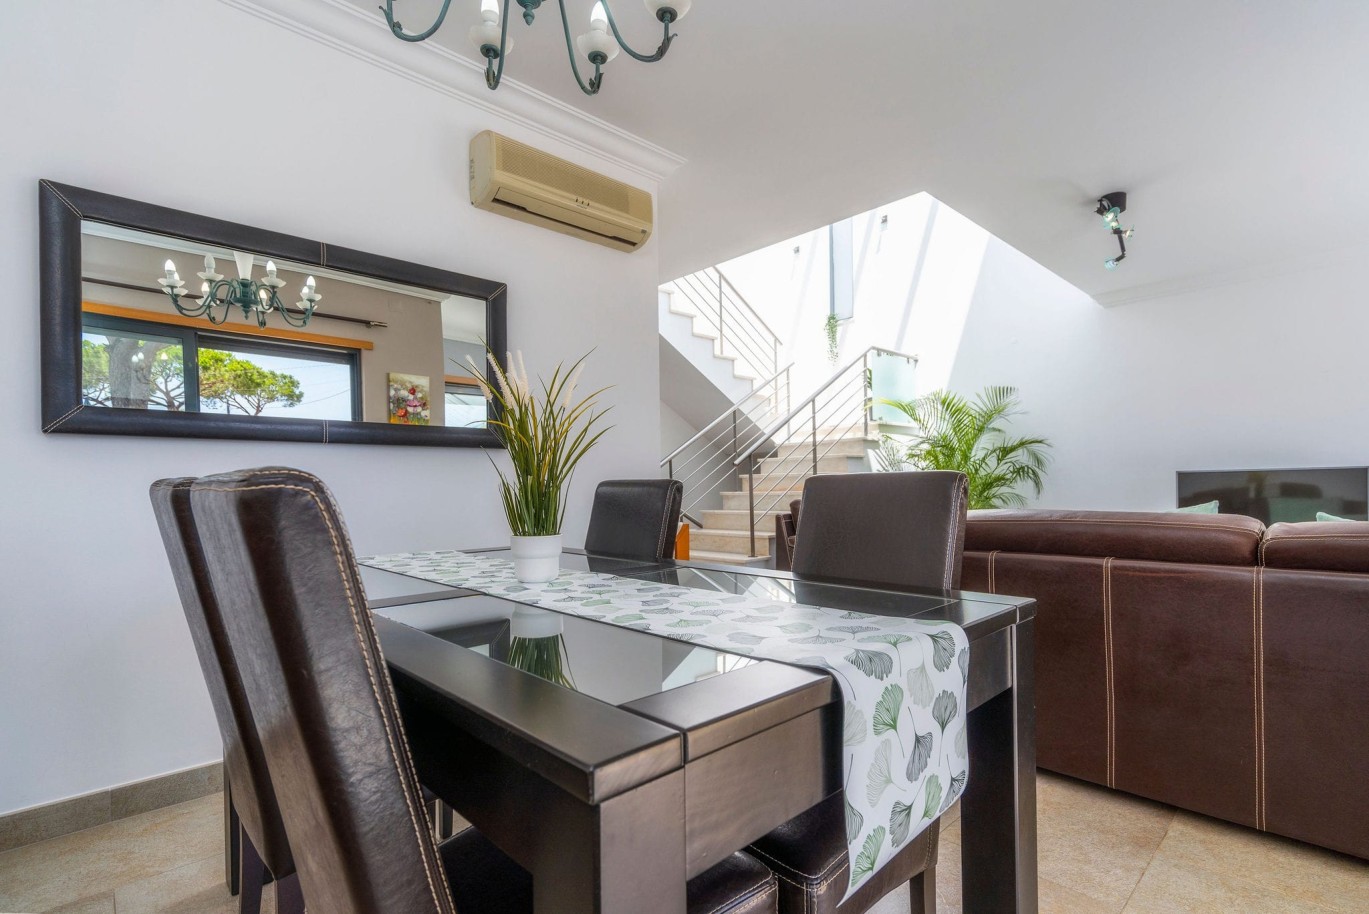 3+1 bedroom villa & 2 bedroom apartment for sale in Quarteira, Algarve_240768